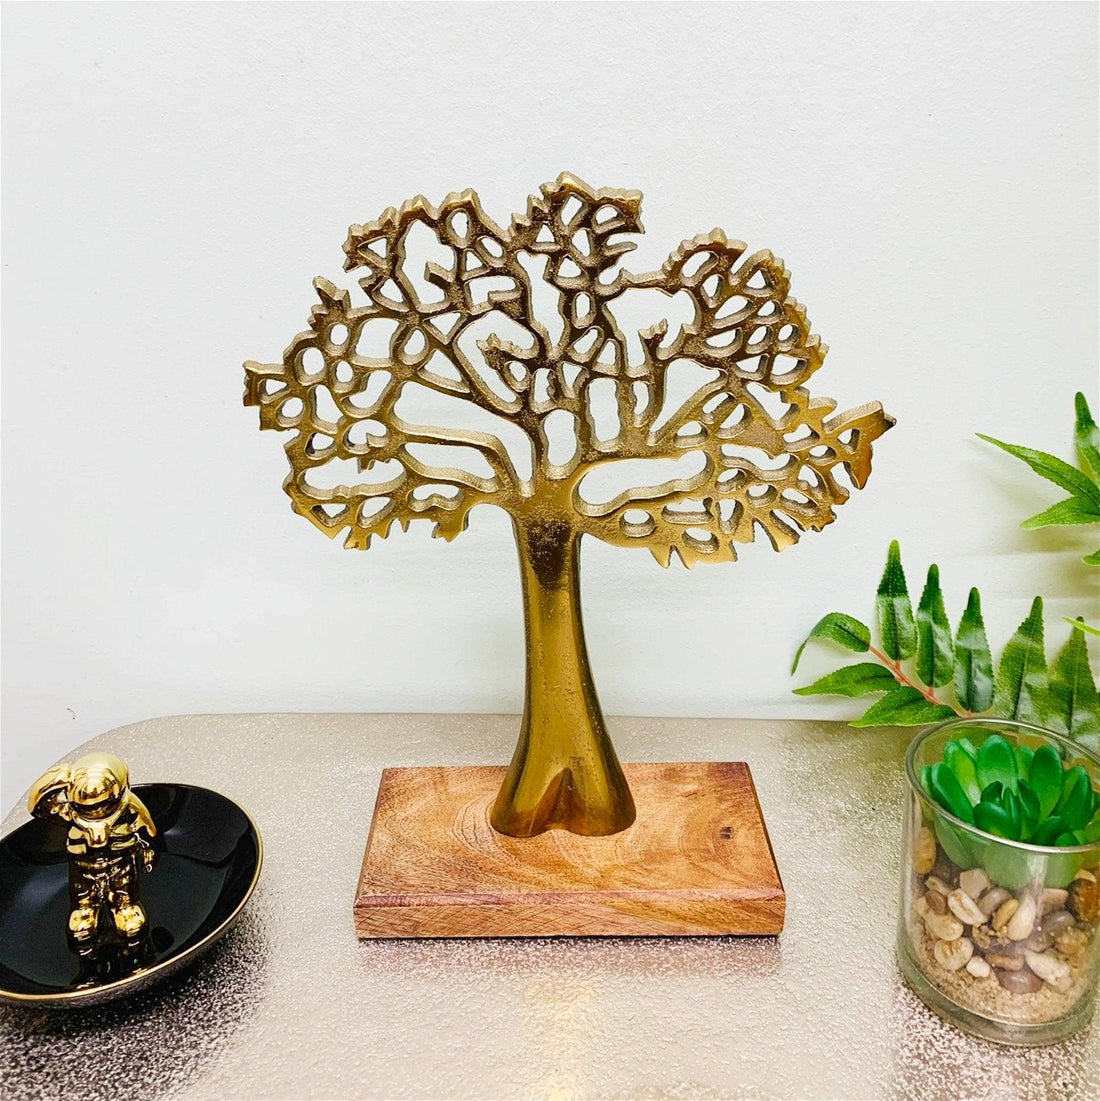 Antique Gold Tree On Wooden Base Medium - £33.99 - Tree Of Life 